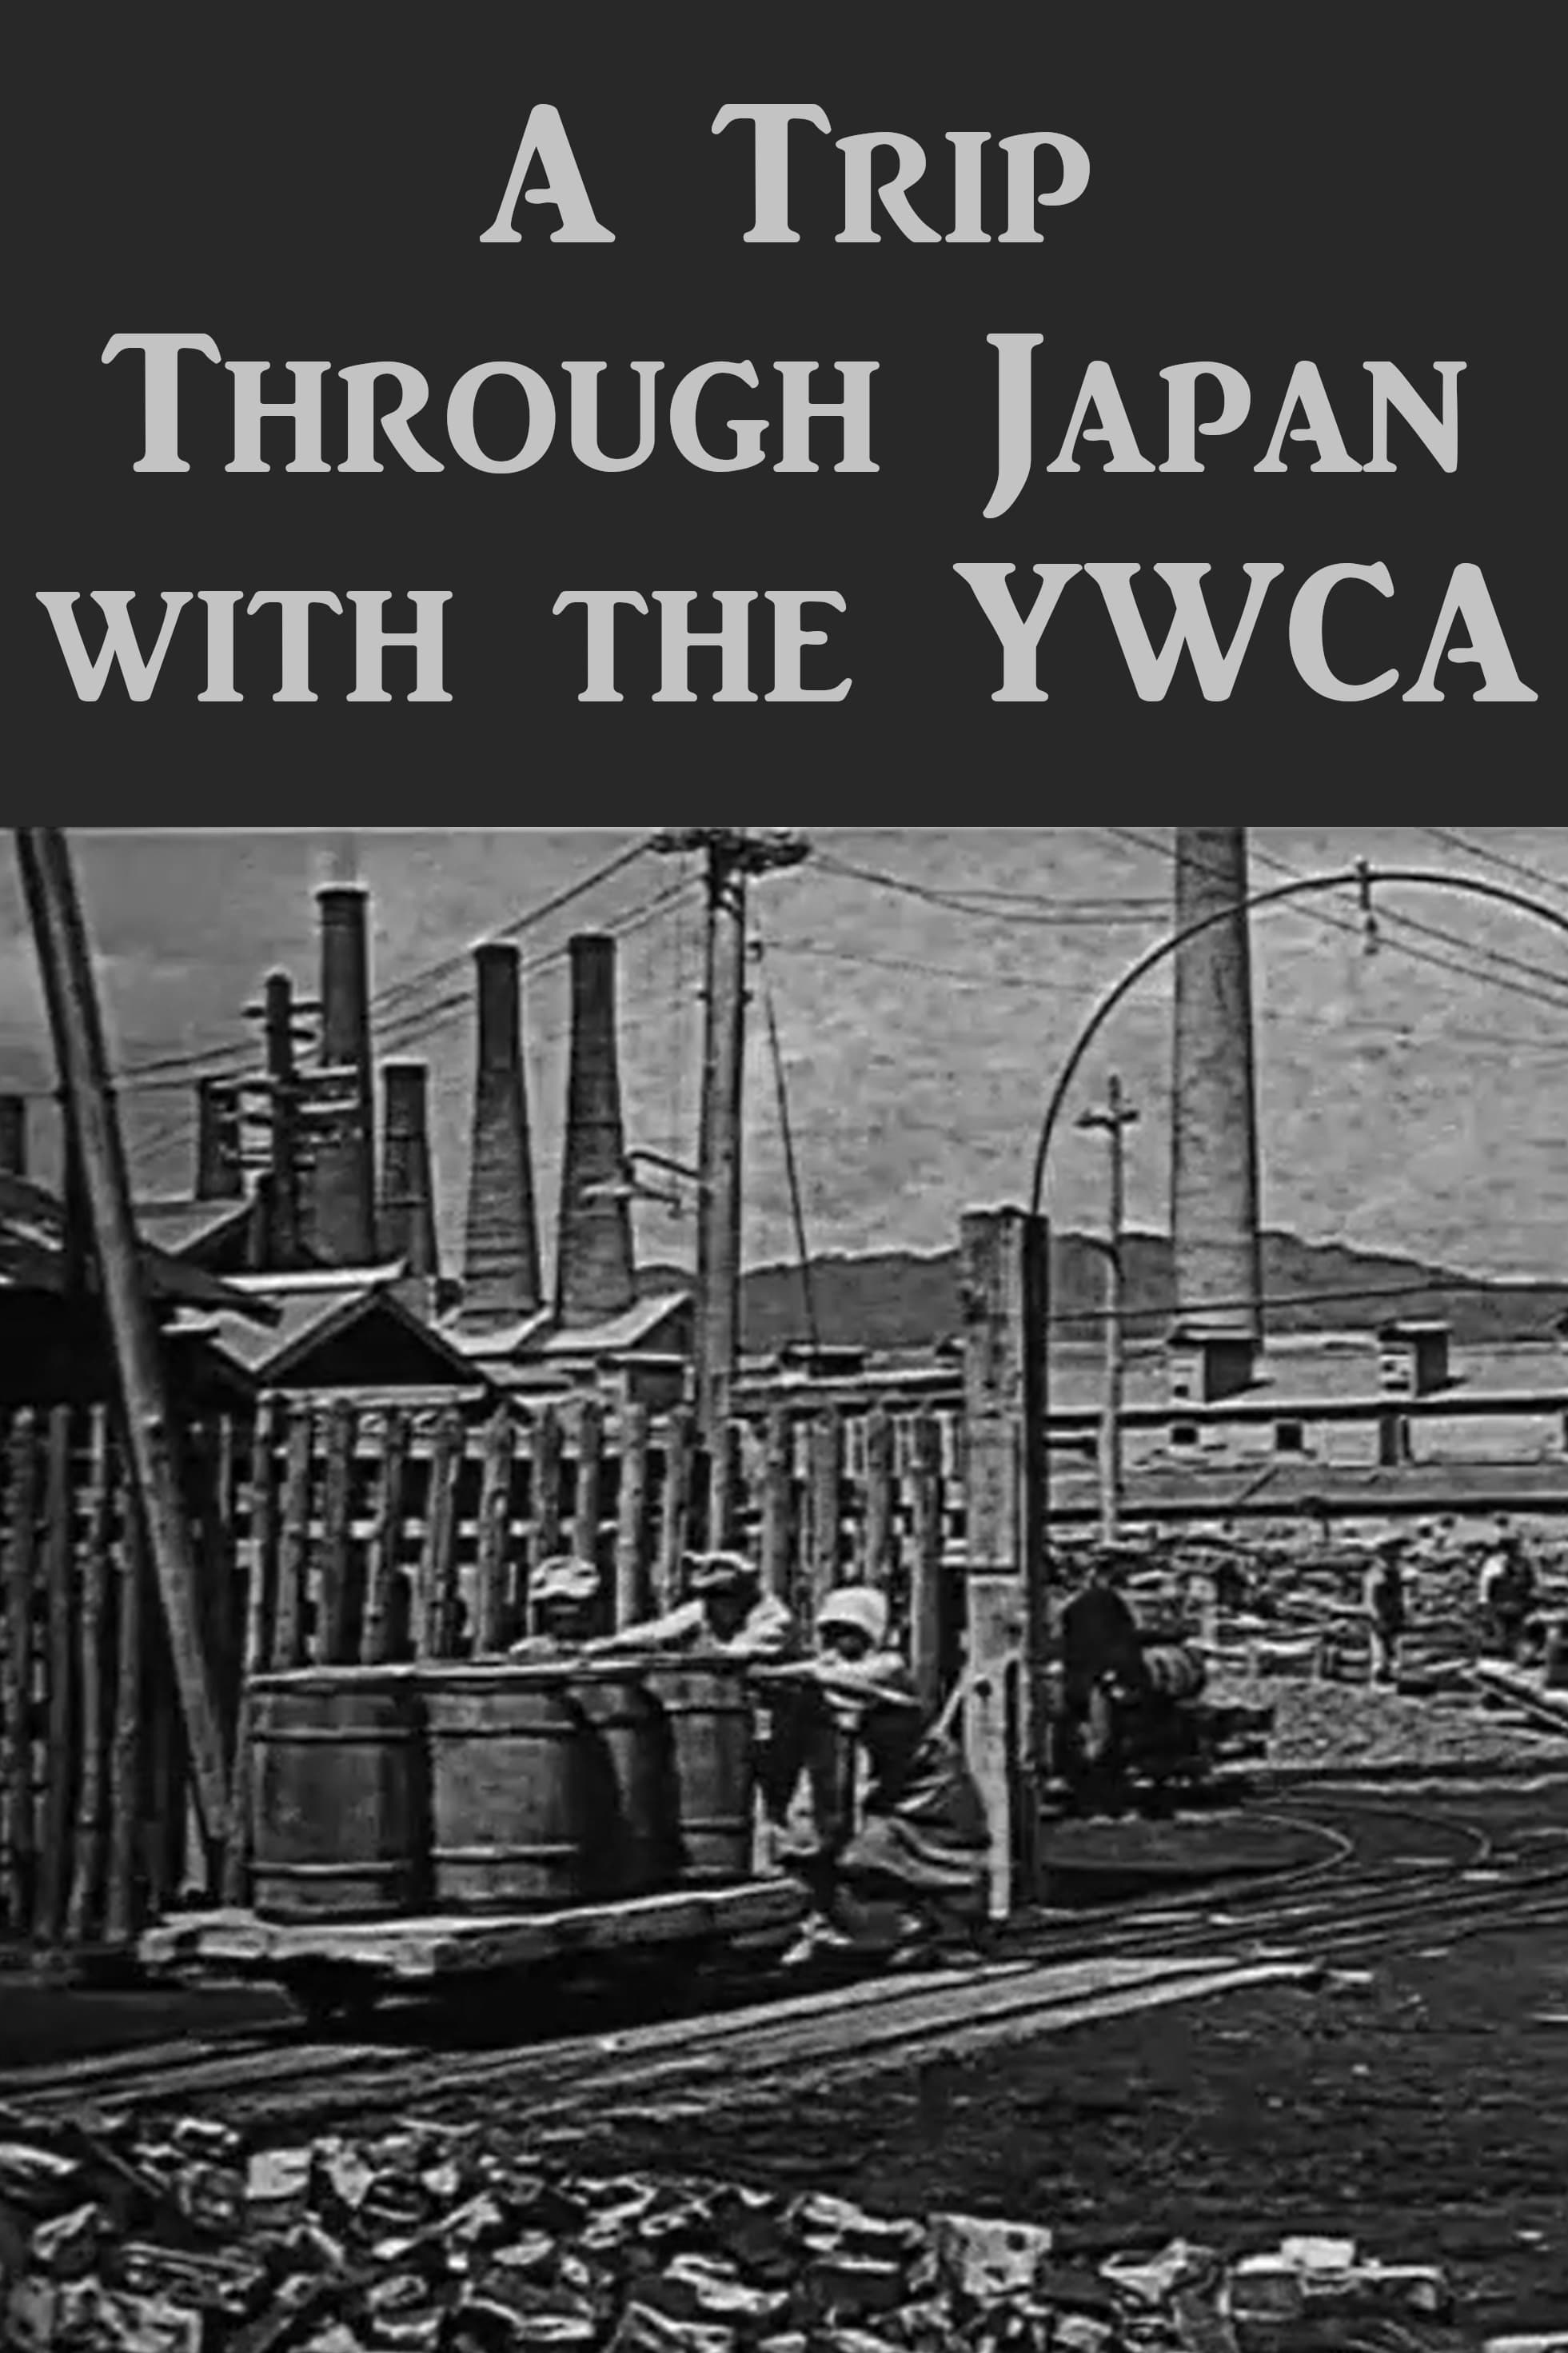 A Trip through Japan with the YWCA